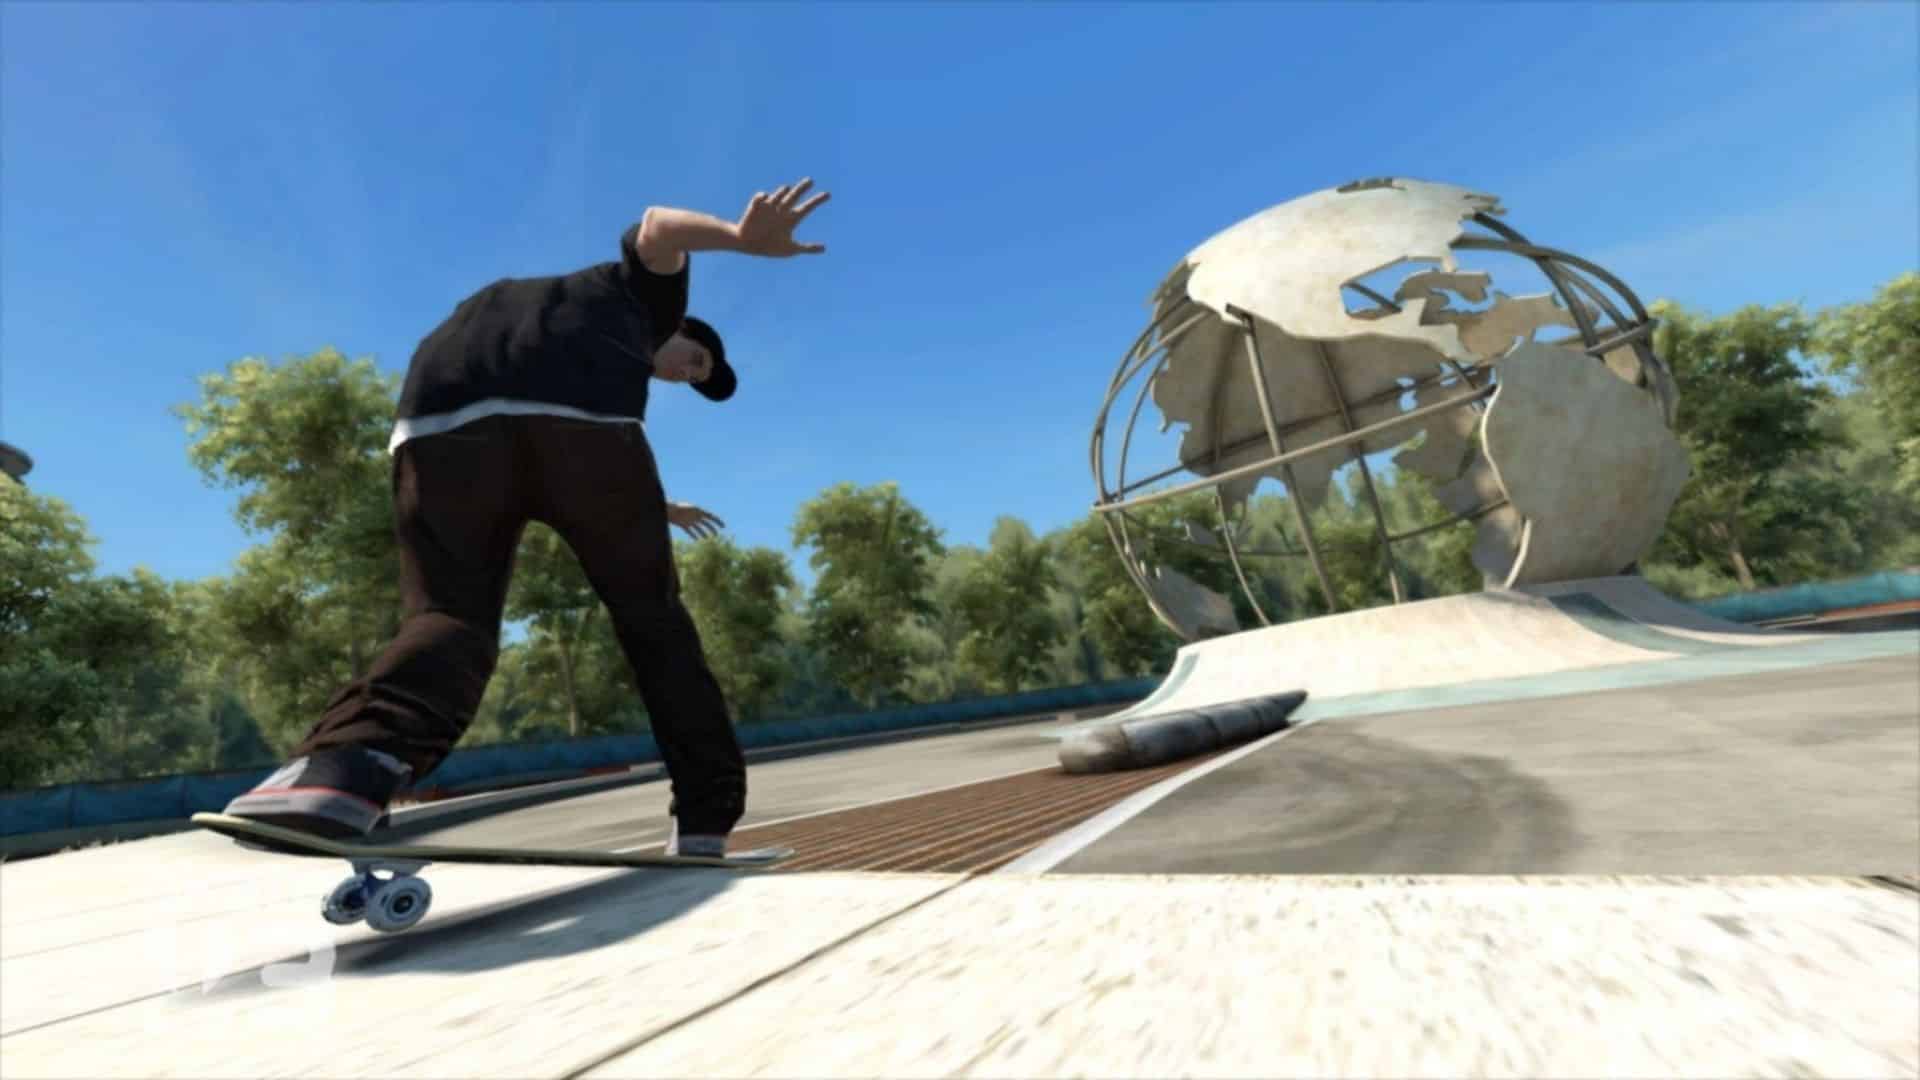 Skate 4 Leaked Gameplay 